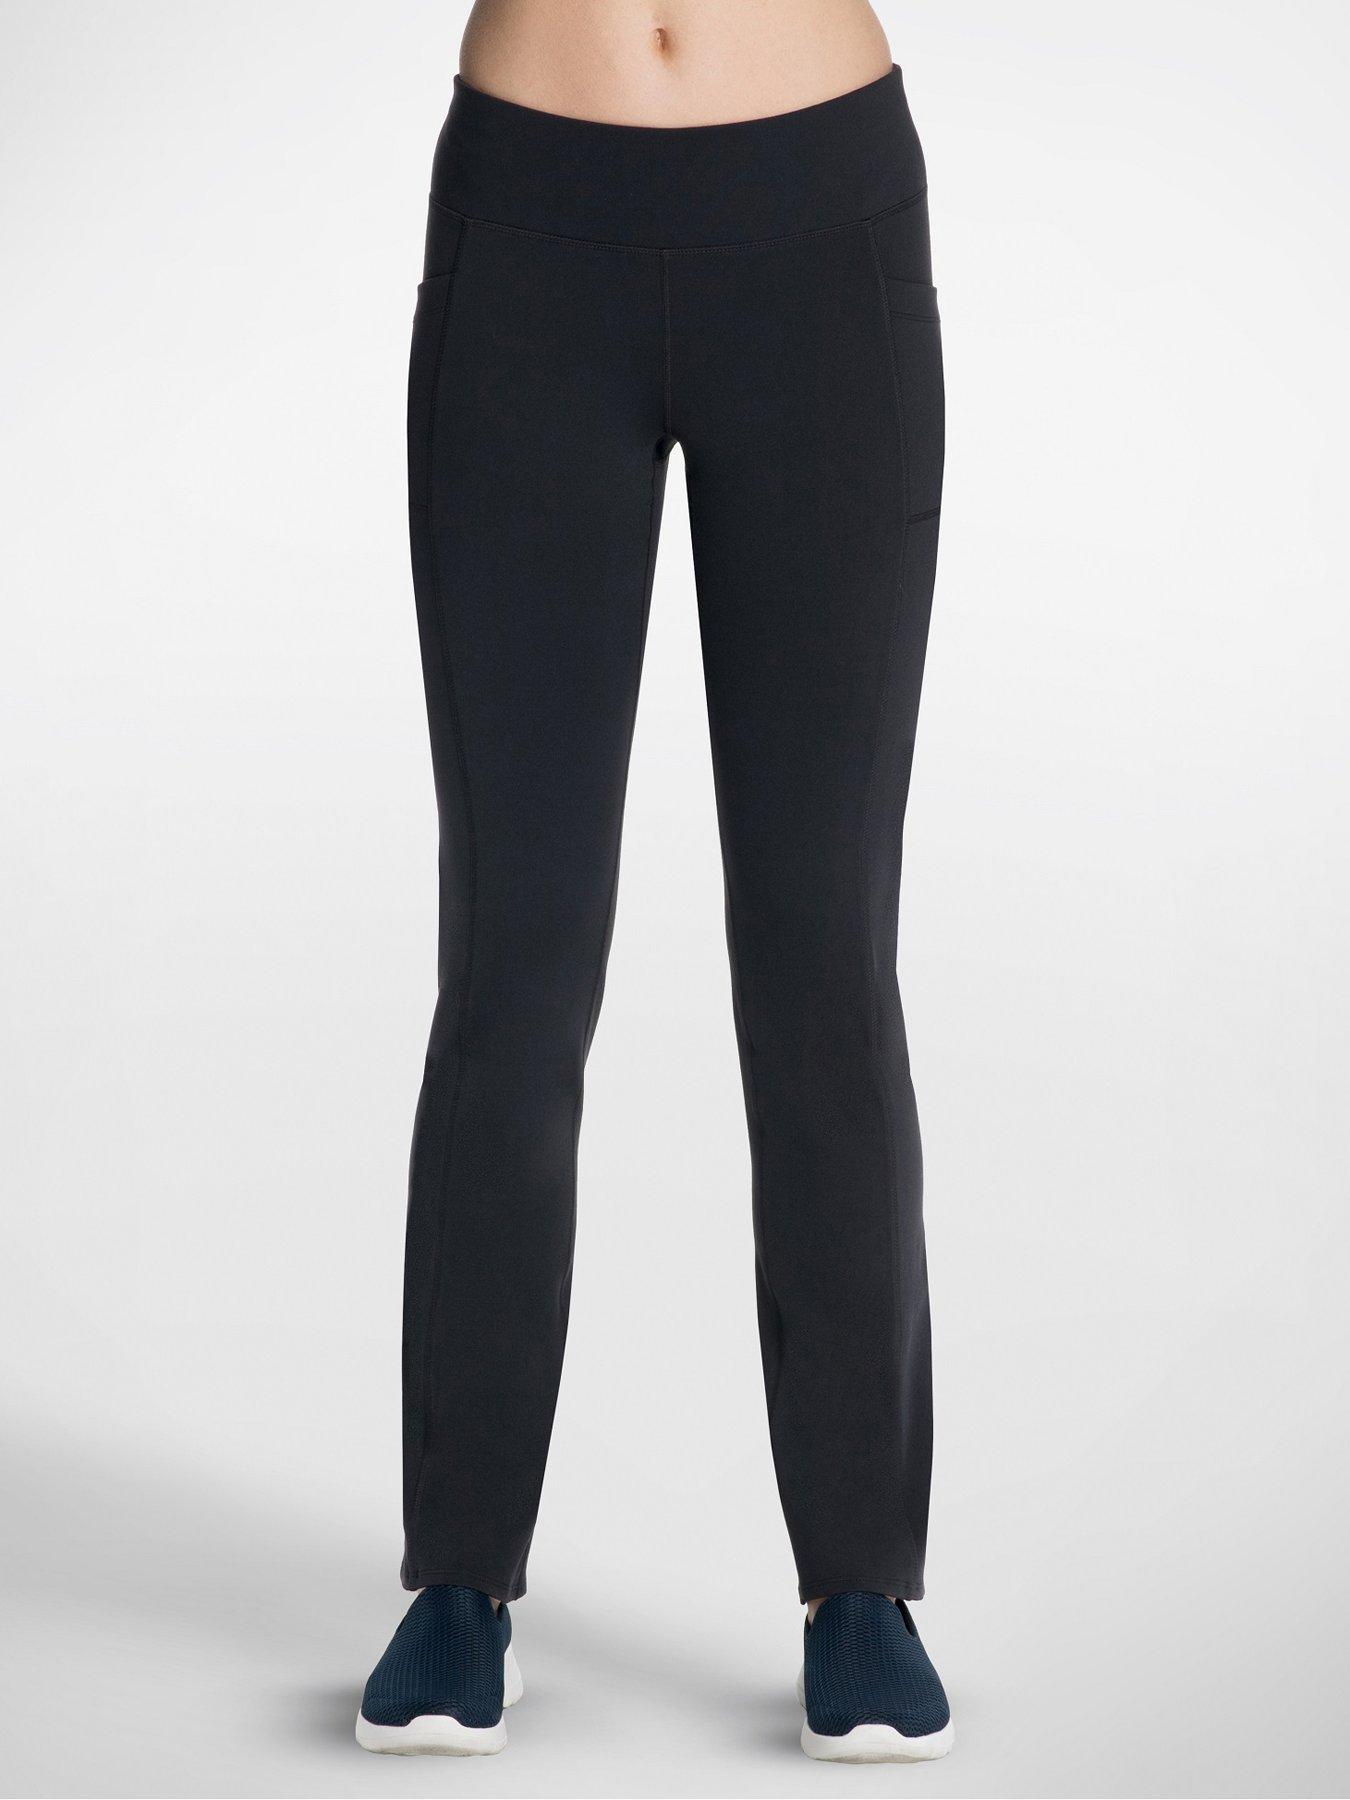 Skechers Women's Gowalk Pant, Bold Black, Medium Petite